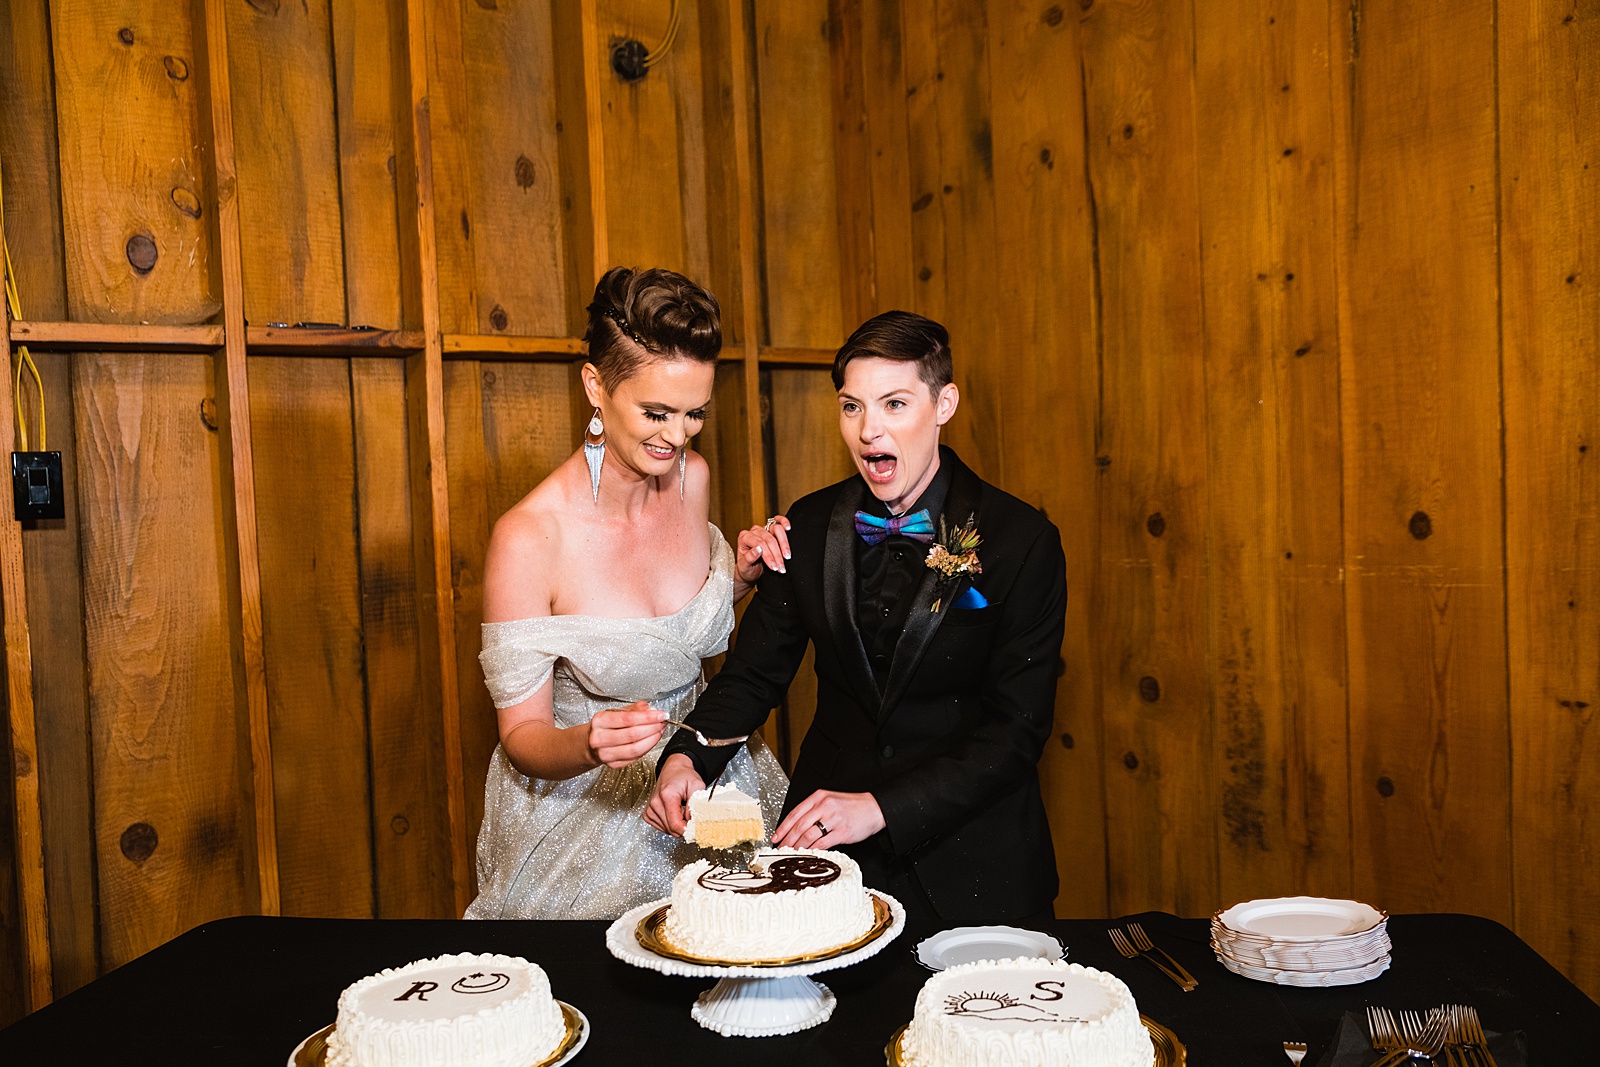 Same sex couple cutting their wedding cake at their Mortimer Farms wedding reception by Arizona wedding photographer PMA Photography.